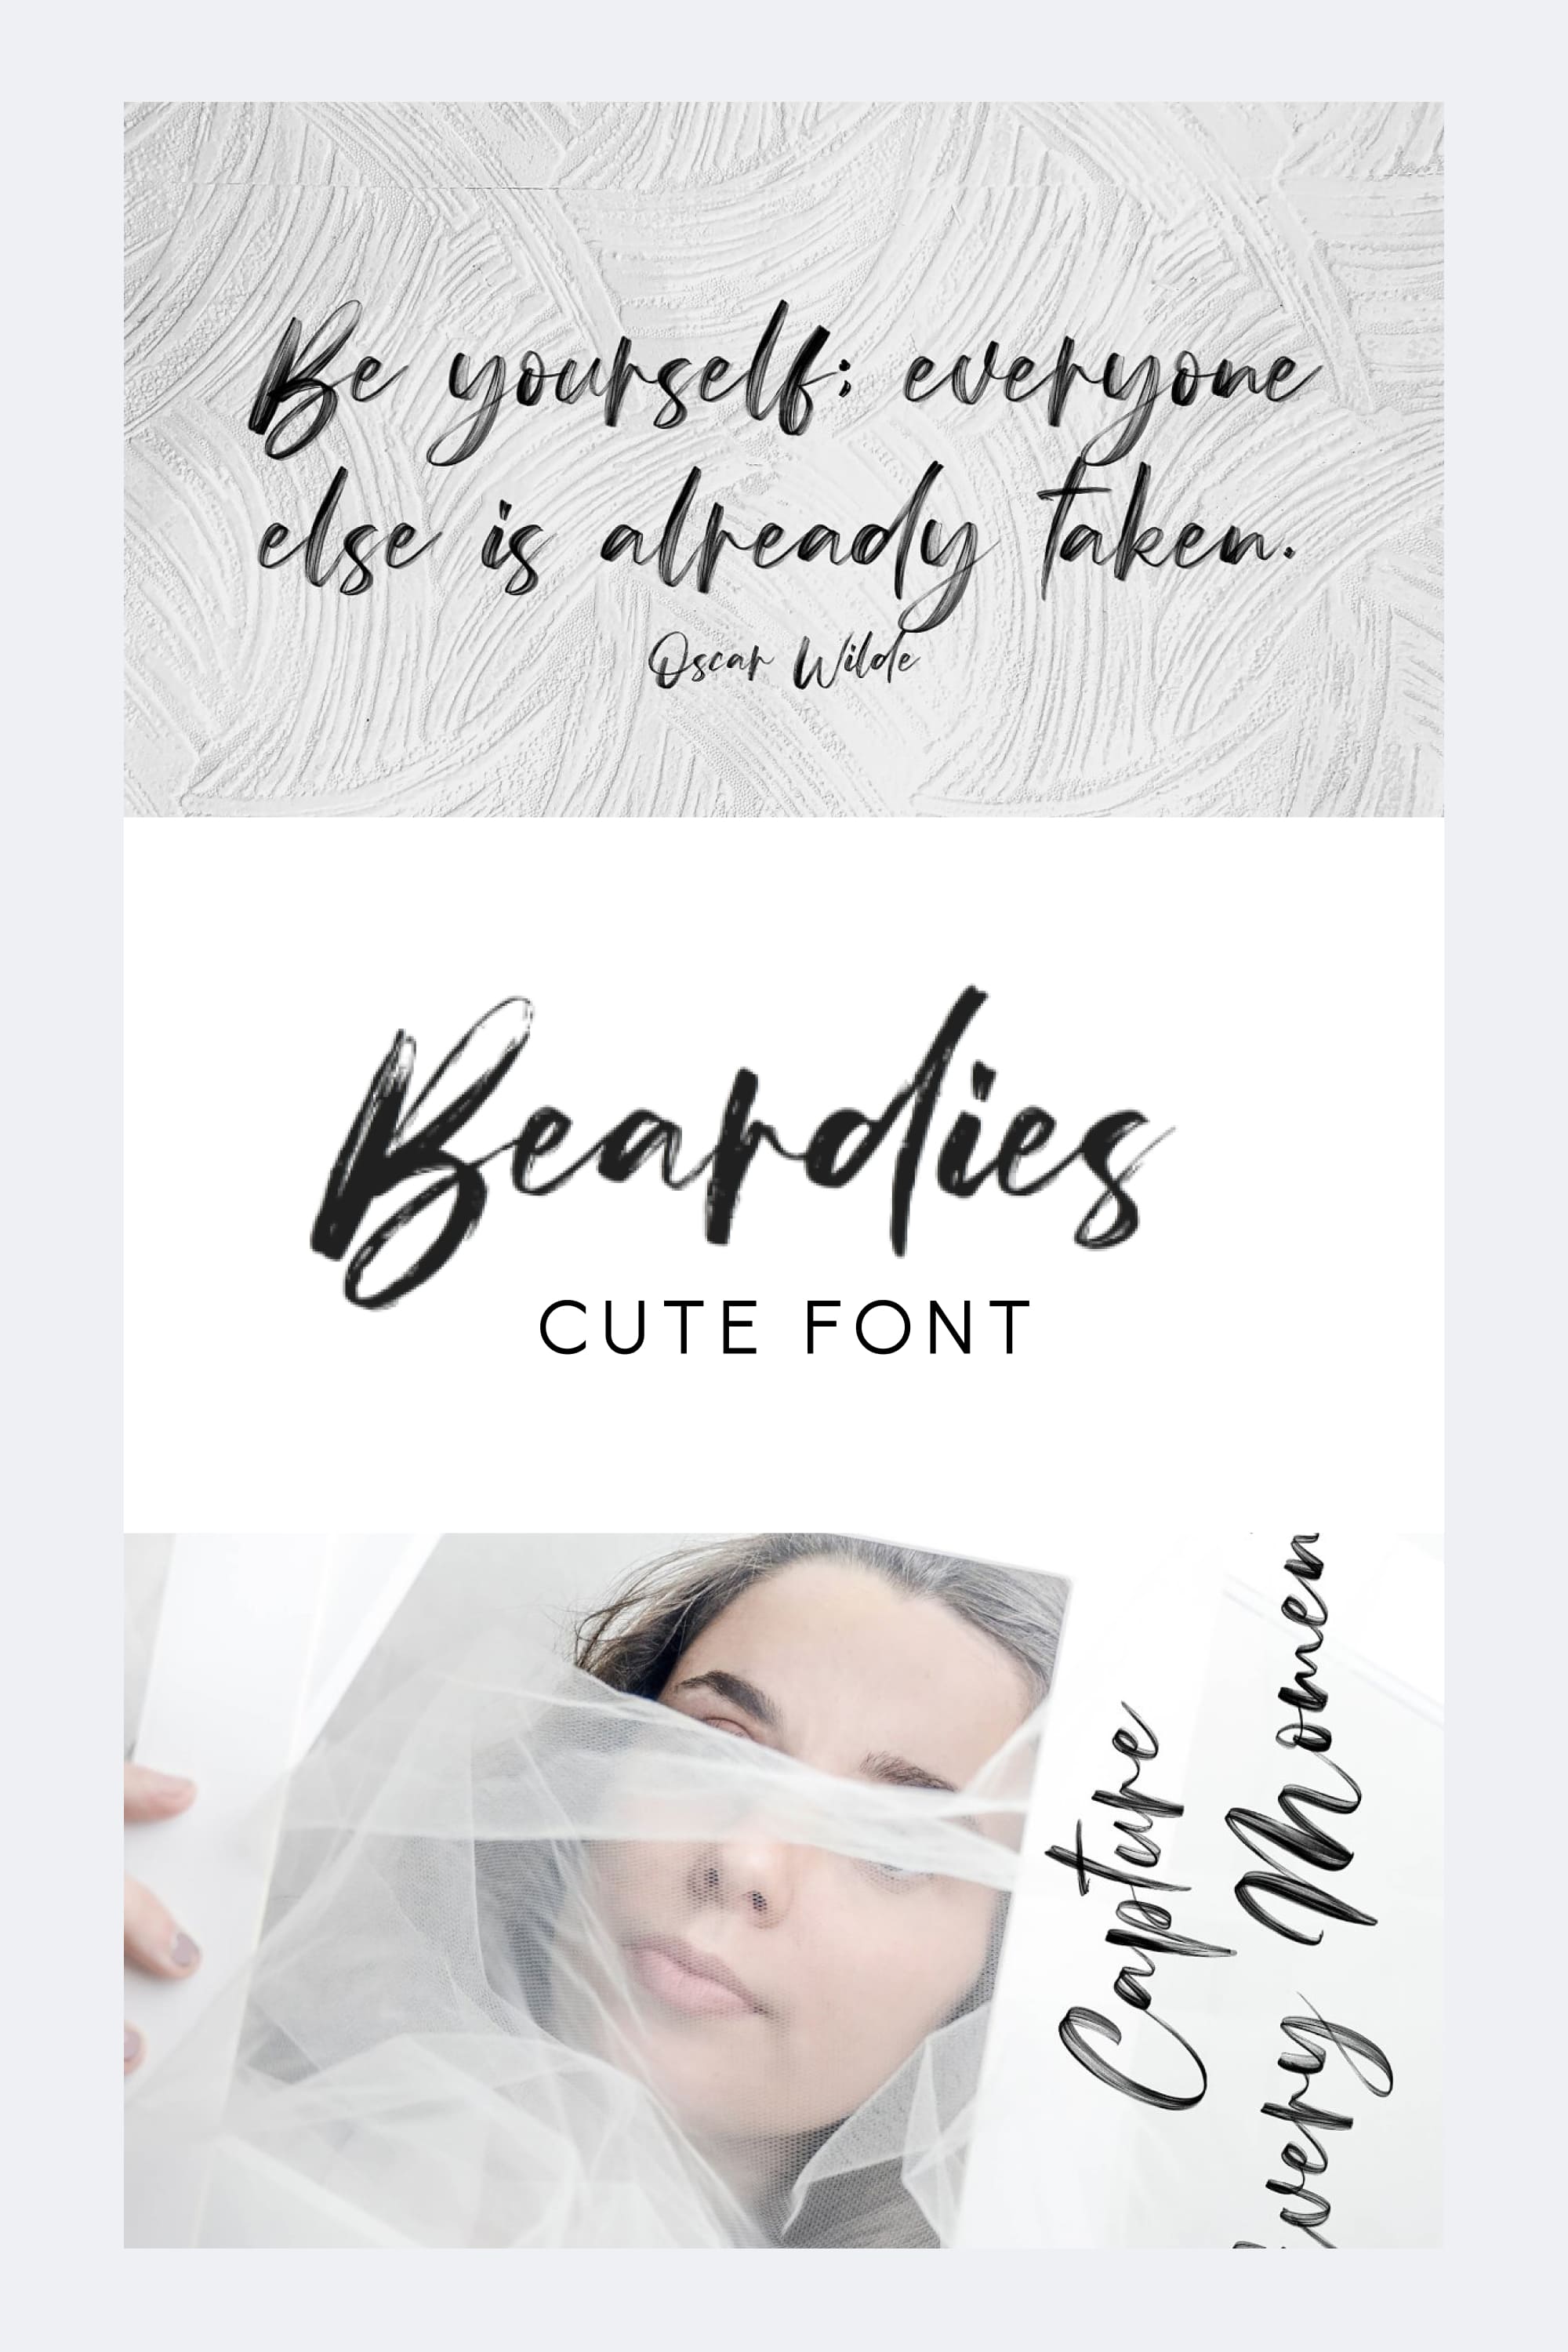 Beardies Cute SVG Font Pinterest.